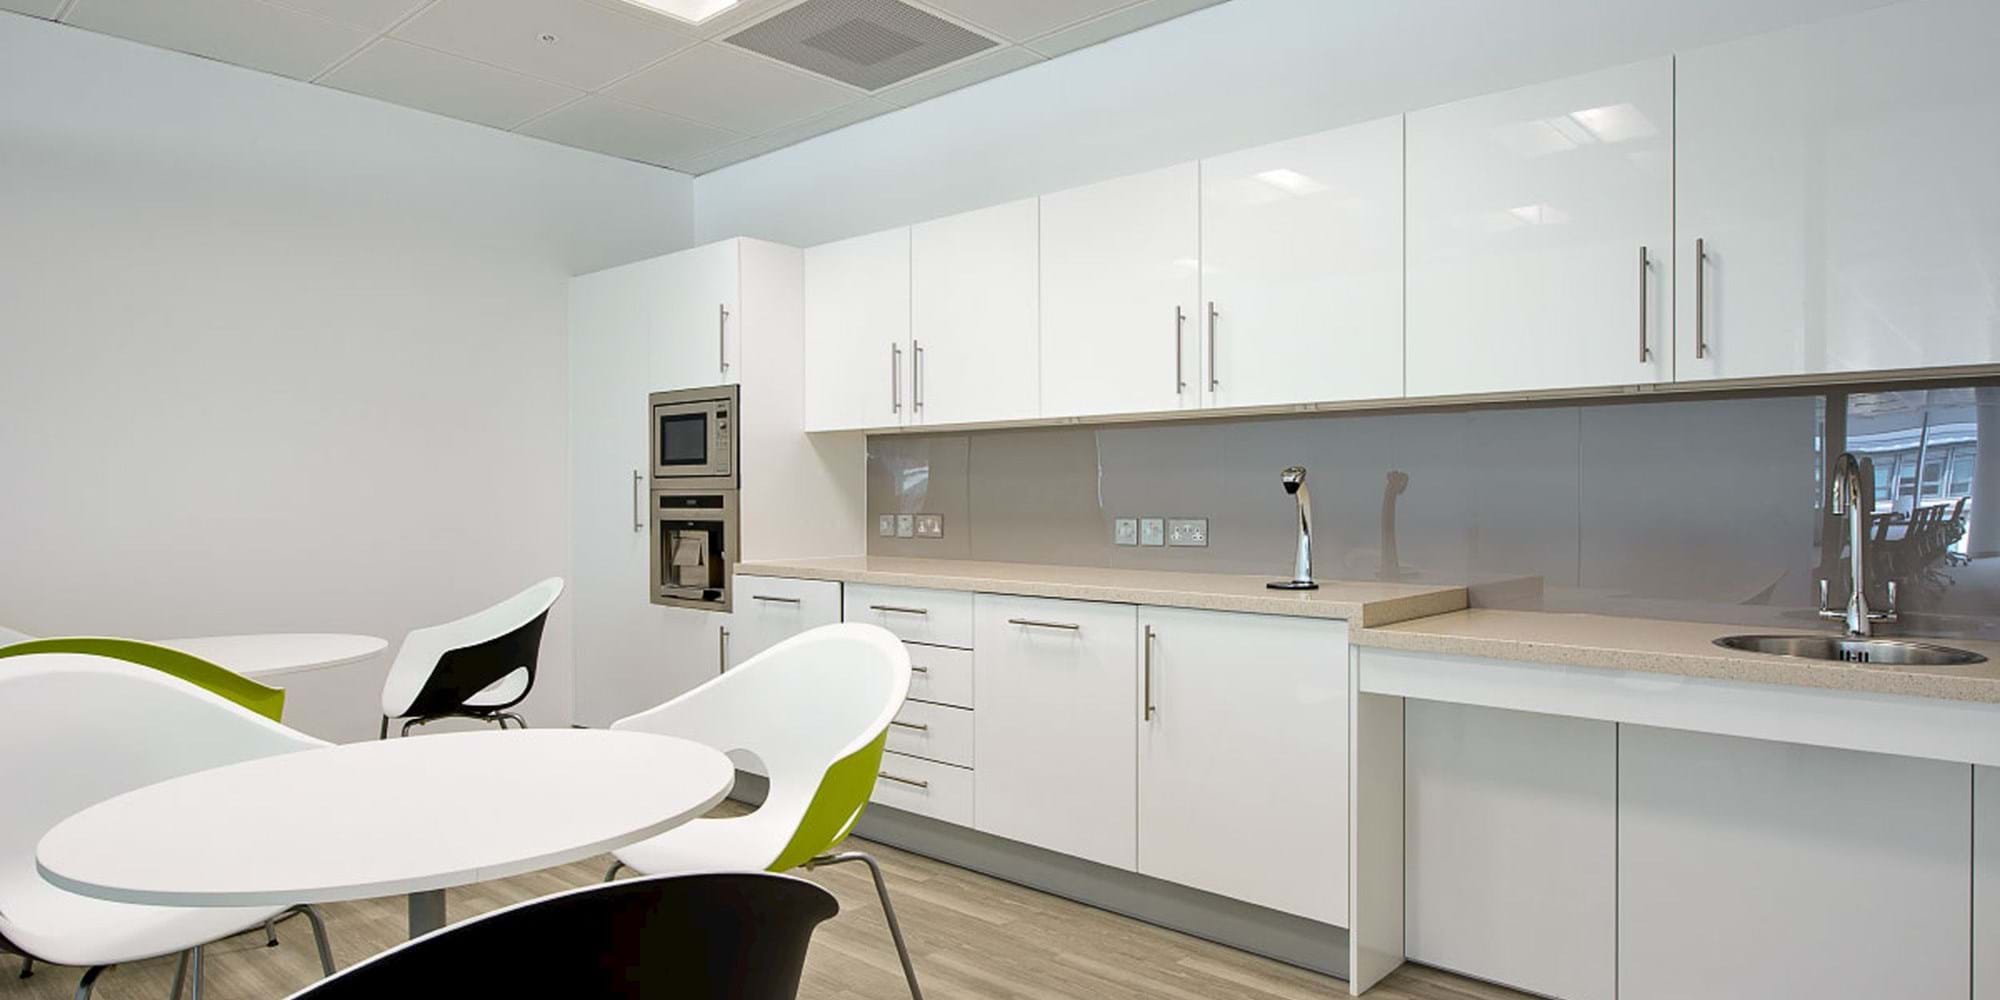 Modus Workspace office design, fit out and refurbishment - Guggenheim Partners - Guggenheim16.jpg